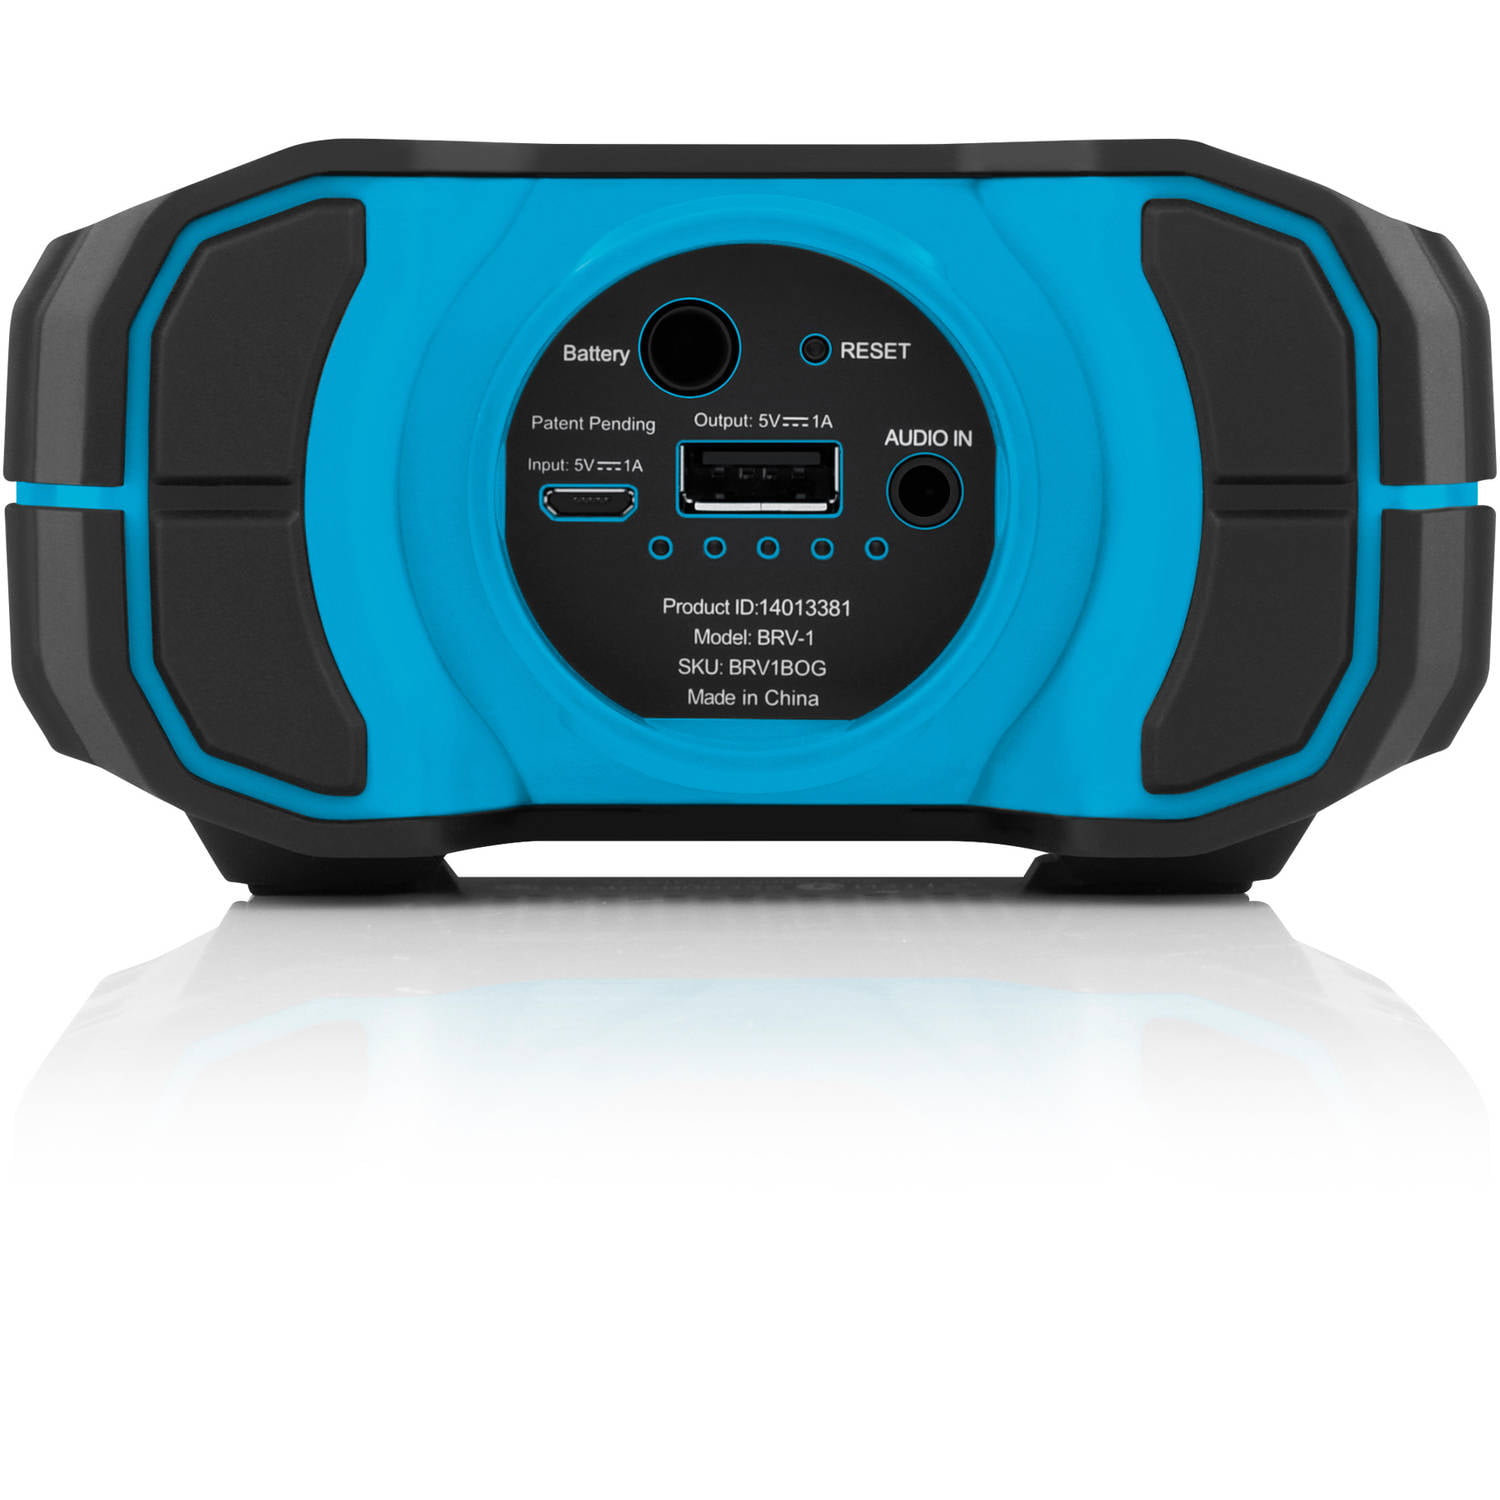 Braven Portable Bluetooth Speaker with Water Resistant, Black, BRV-1 